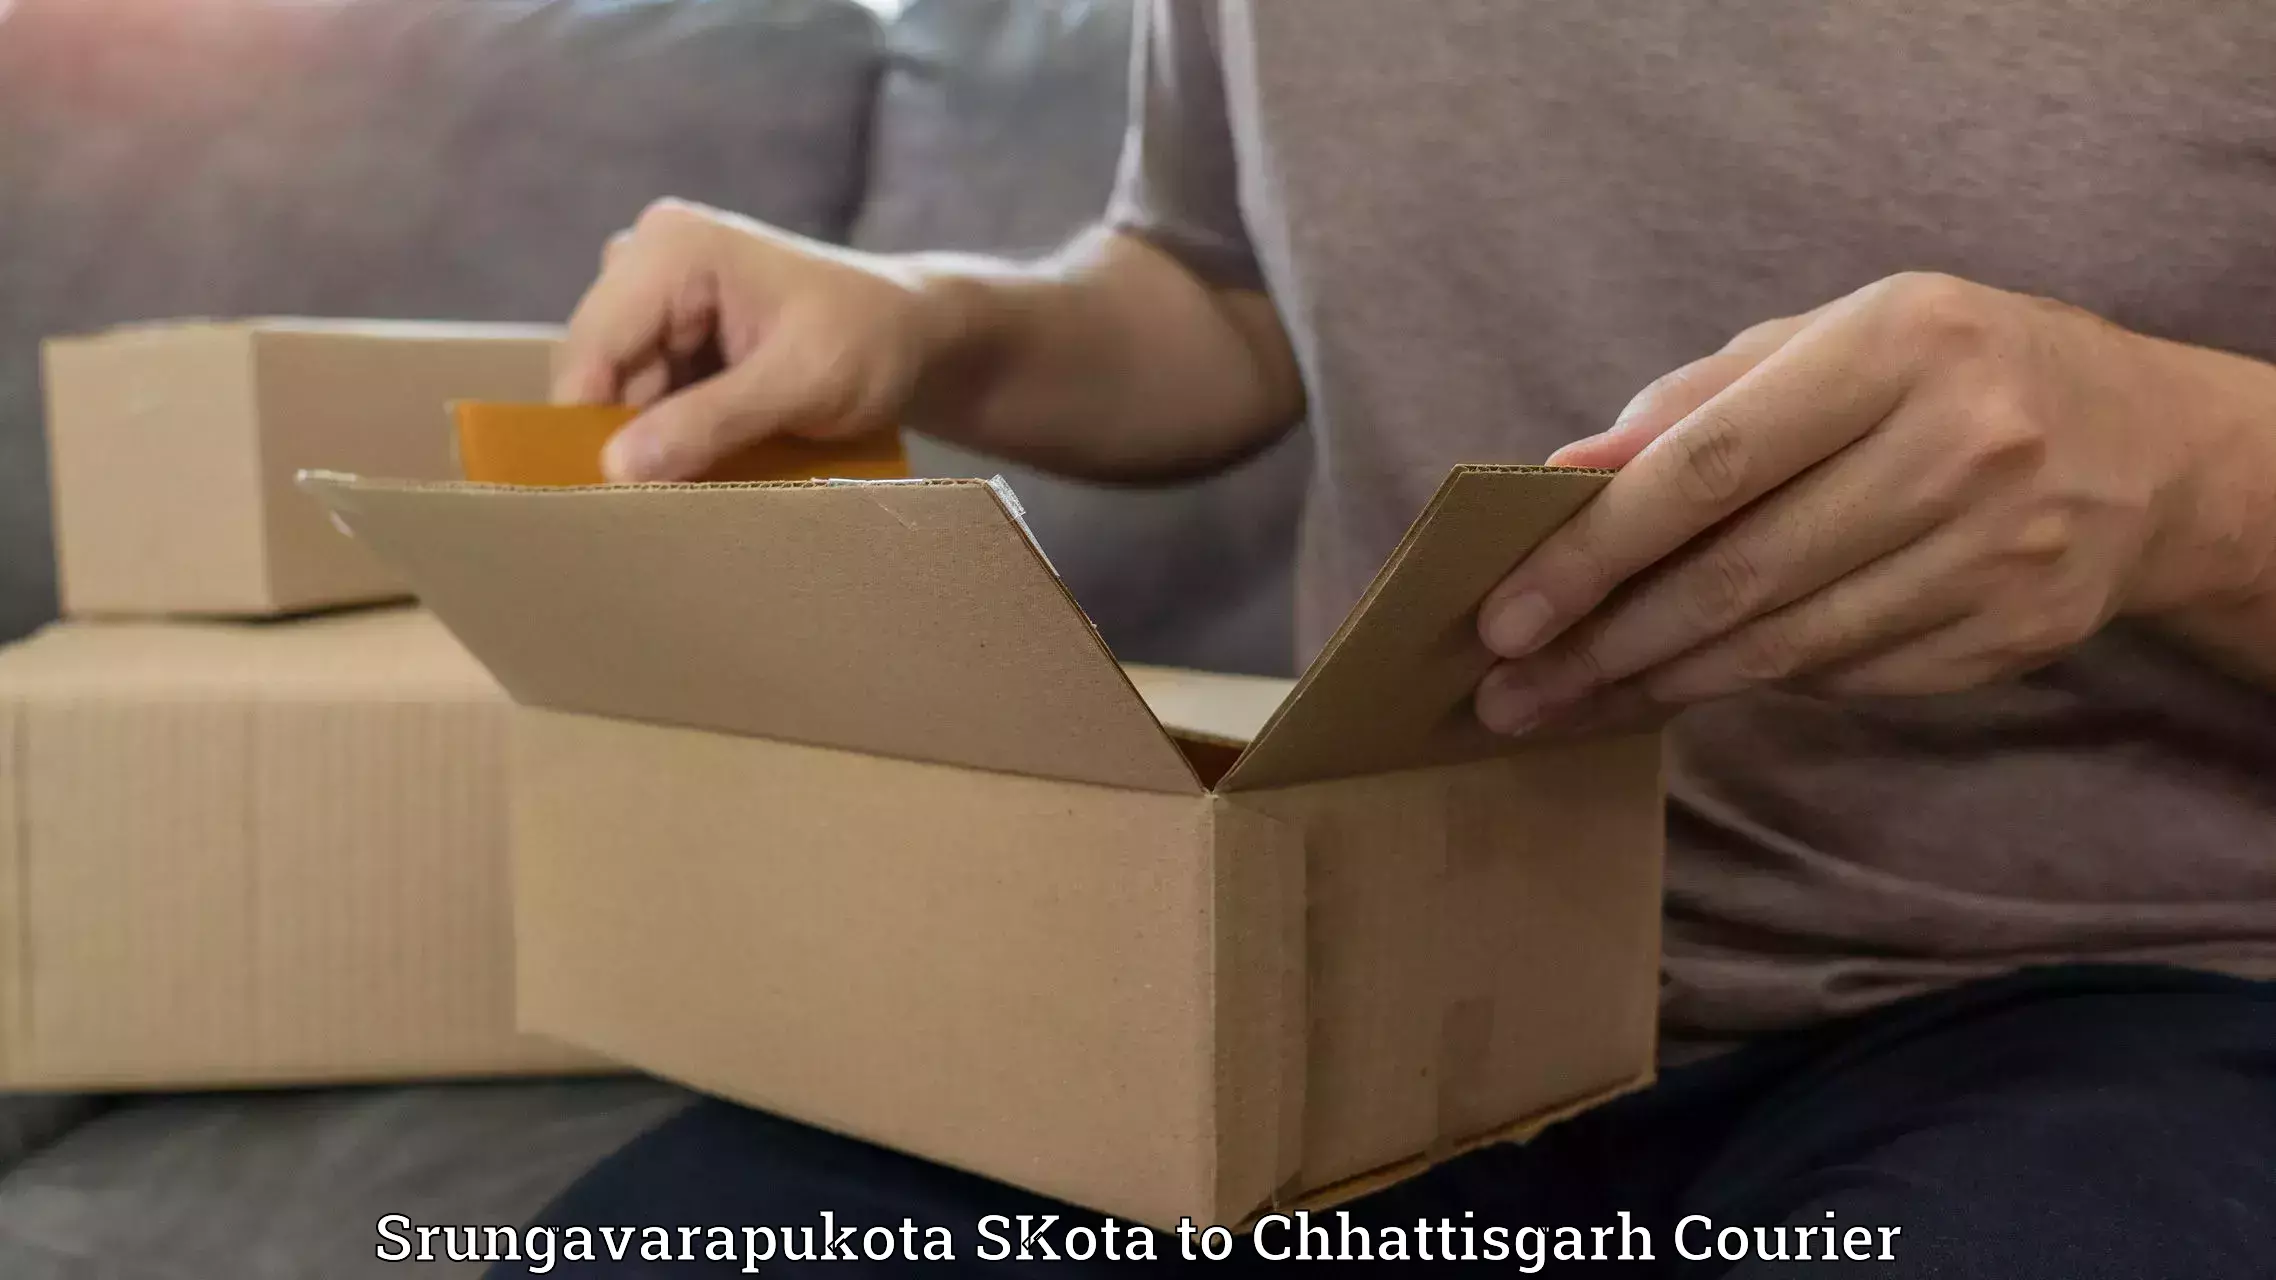 Reliable package handling Srungavarapukota SKota to Bijapur Chhattisgarh